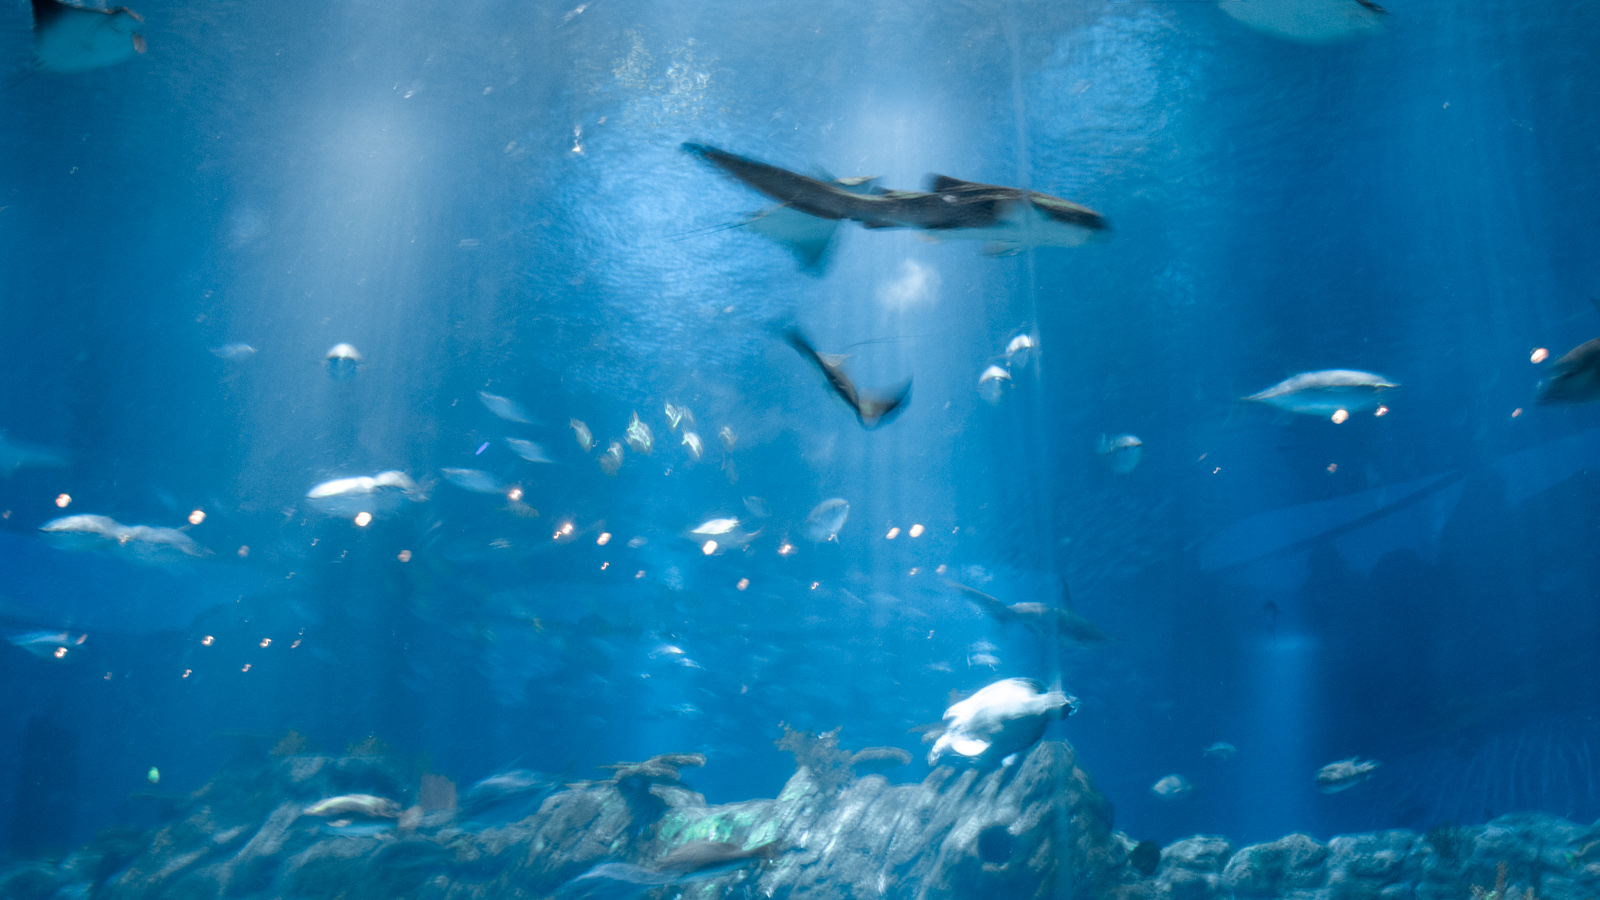 Ocean Park – The Grand Aquarium, Hong Kong